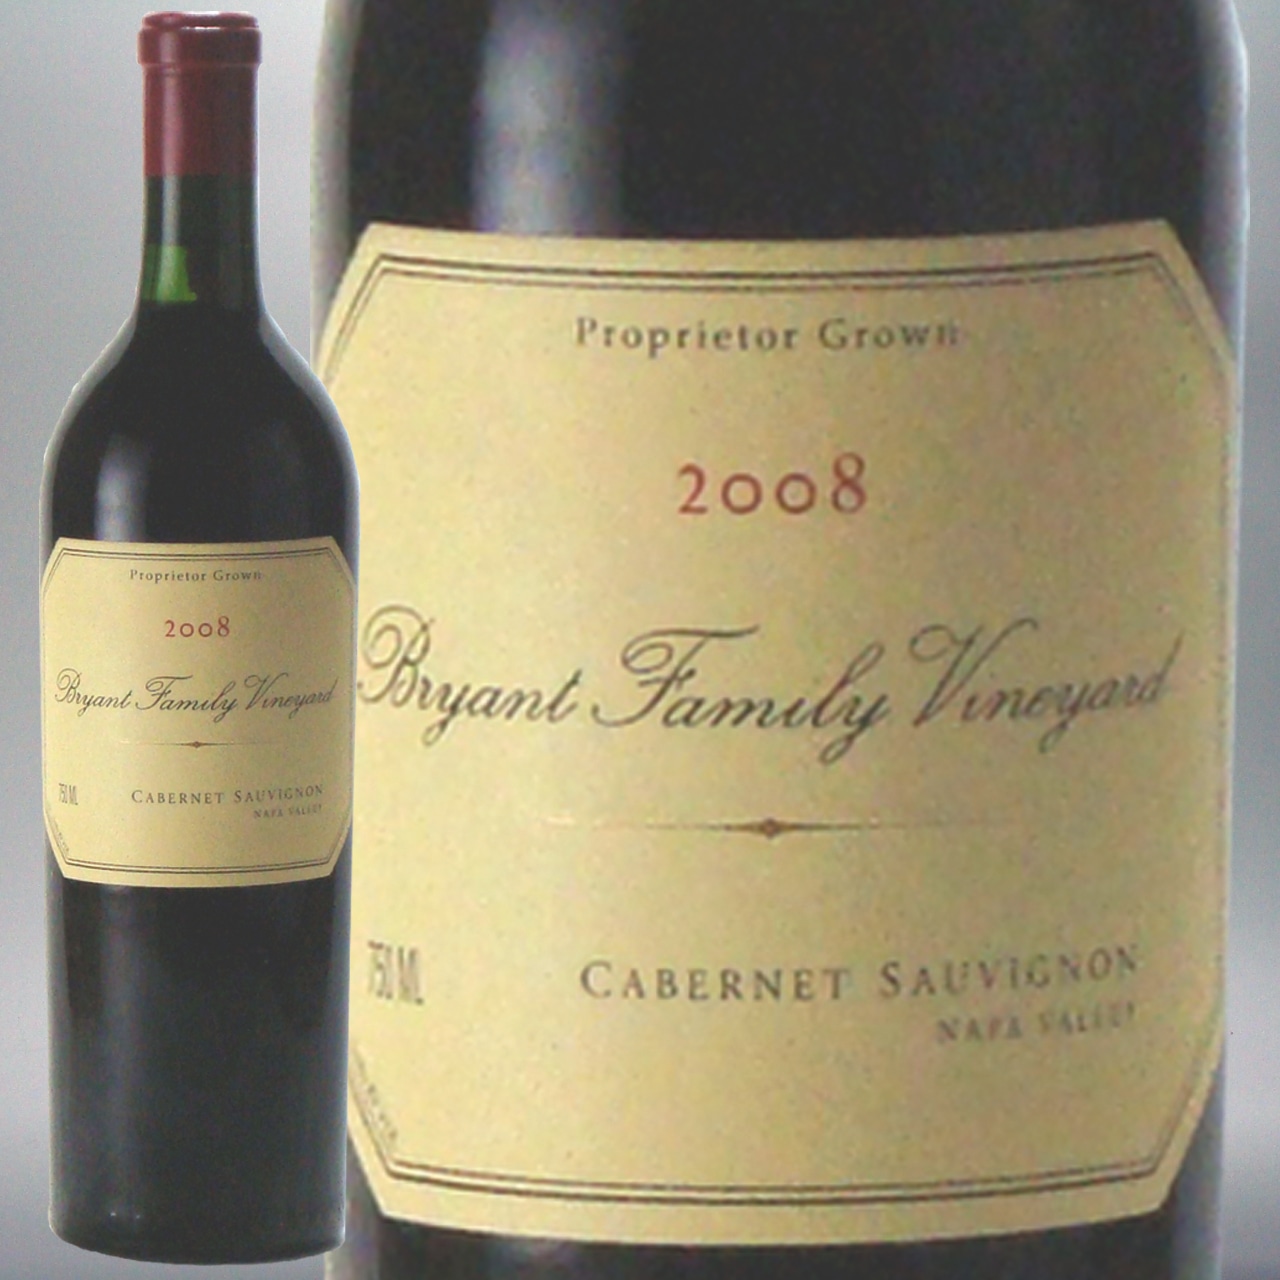 Bryant Family Vineyard Cabernet Sauvignon 2008